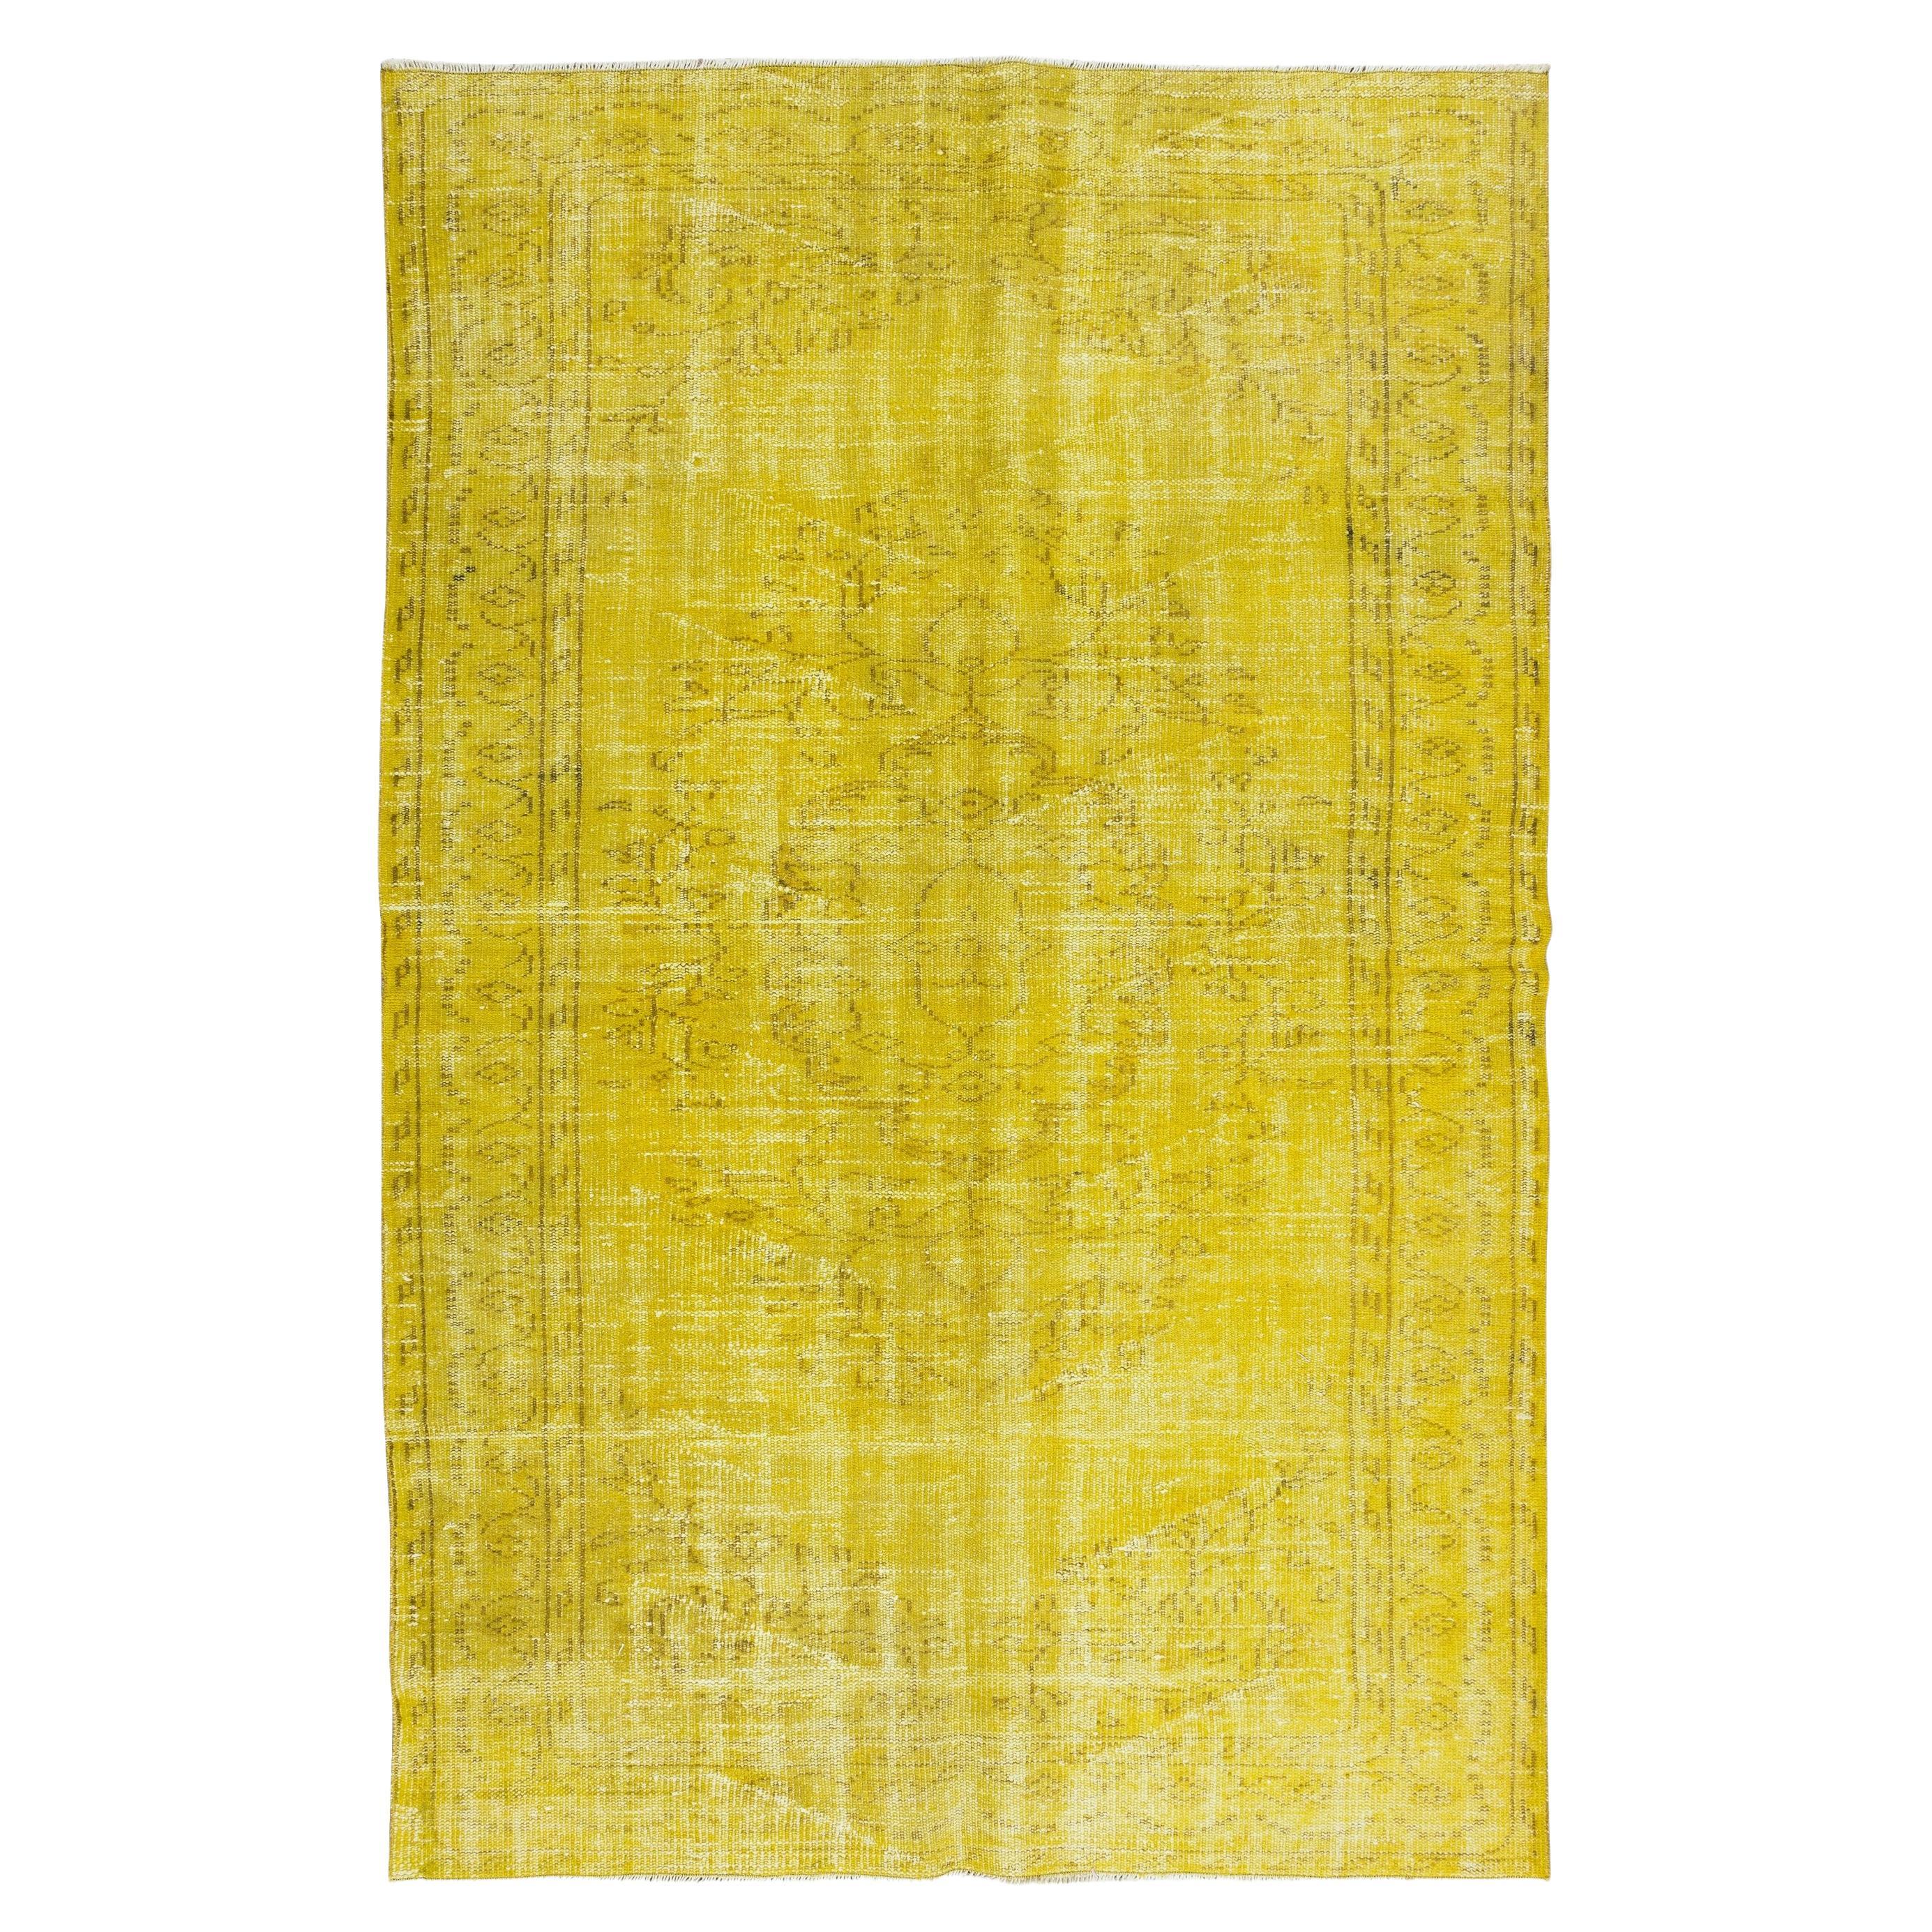 5.6x9.5 Ft Yellow Area Rug for Modern Home & Office, Turkish Handmade Carpet